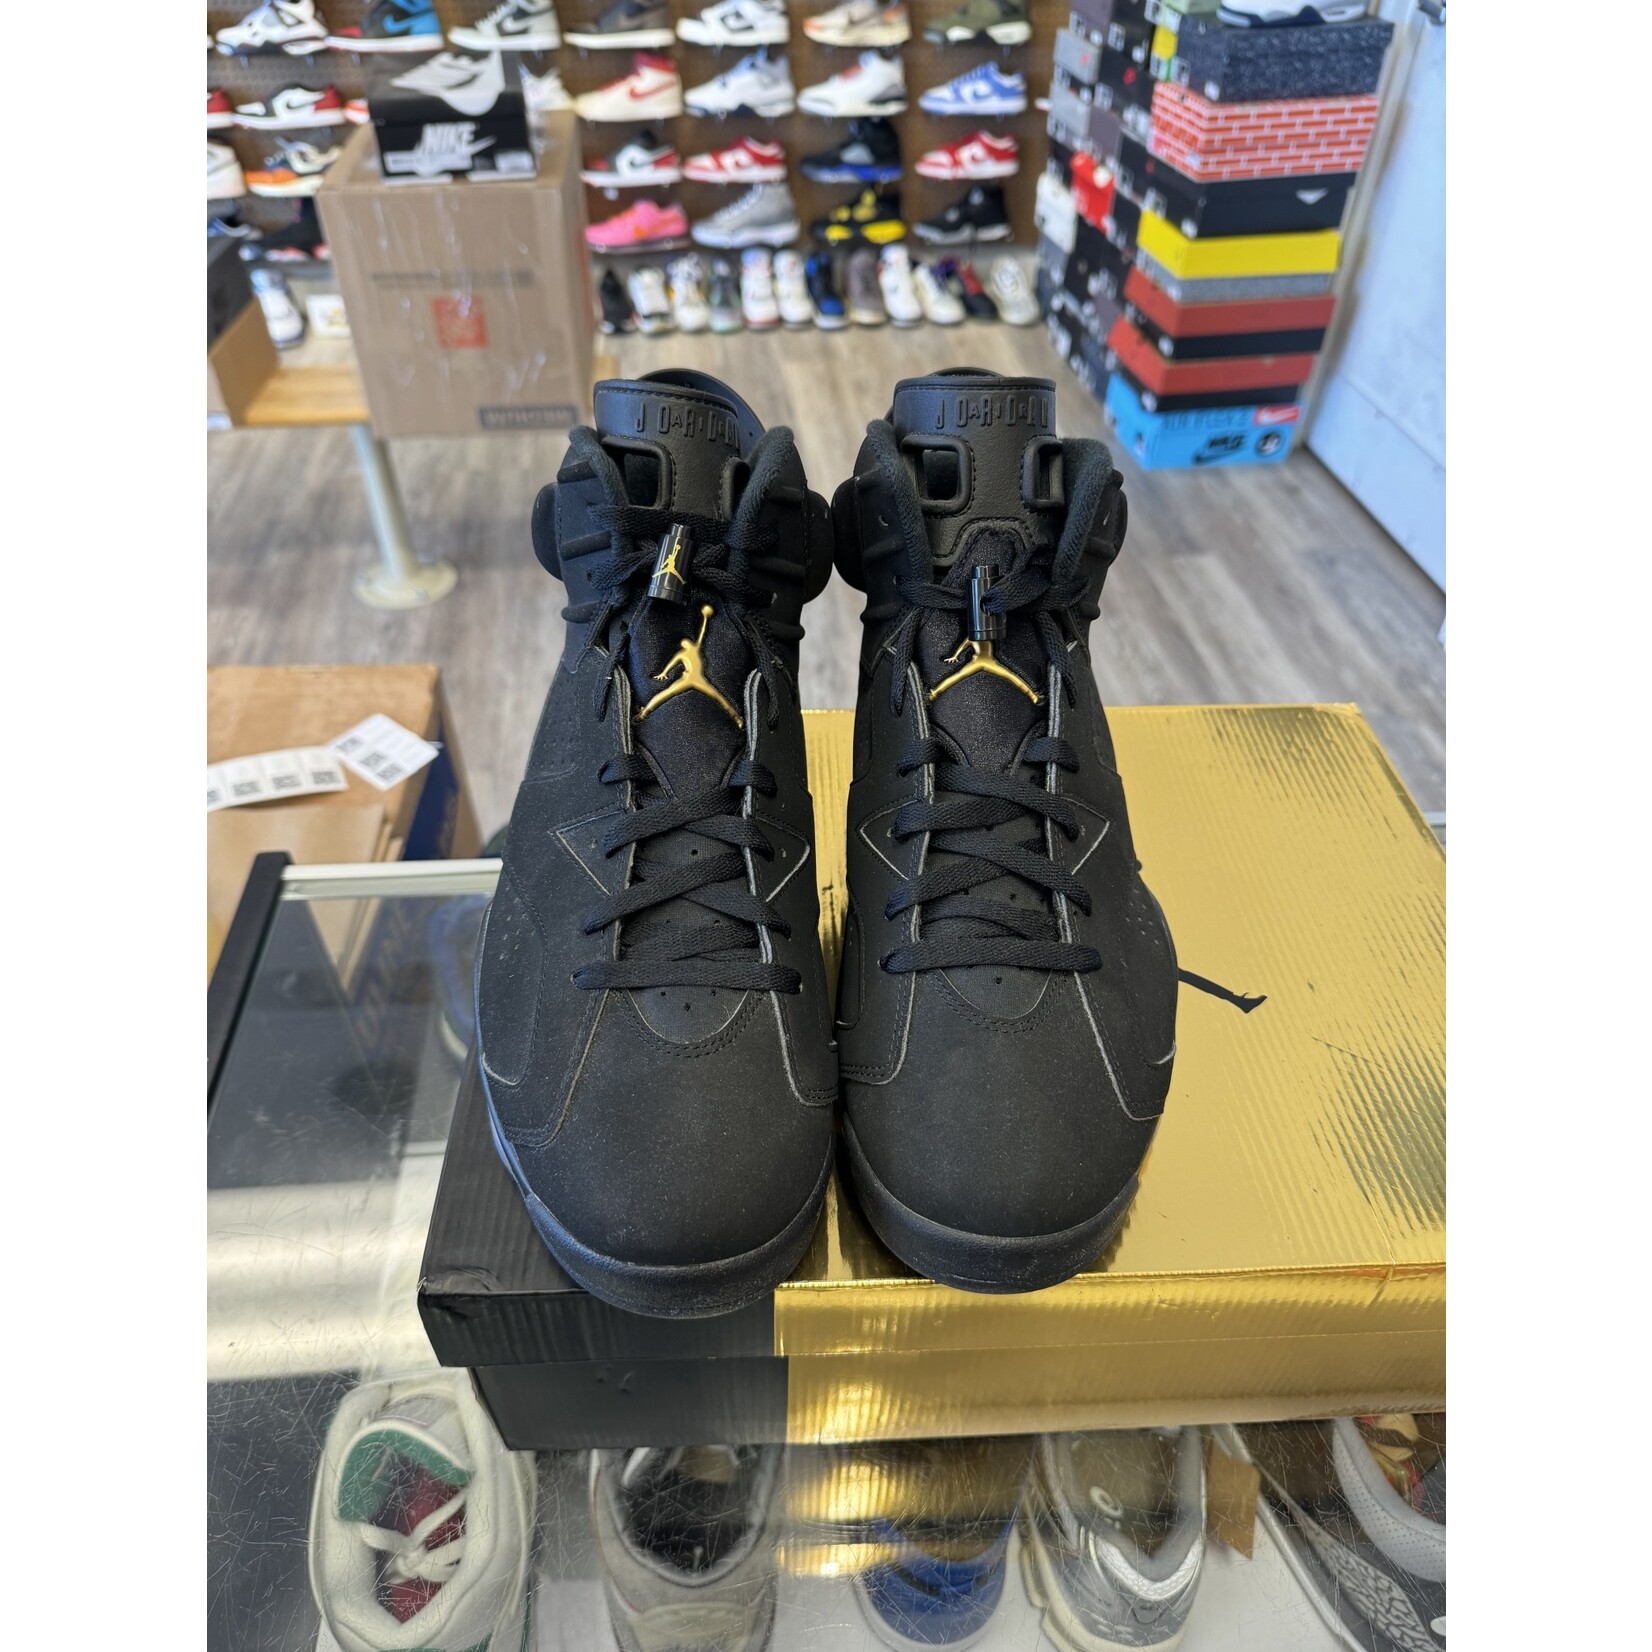 Jordan Jordan 6 Retro DMP (2020) Size 11.5, PREOWNED WORN ONCE